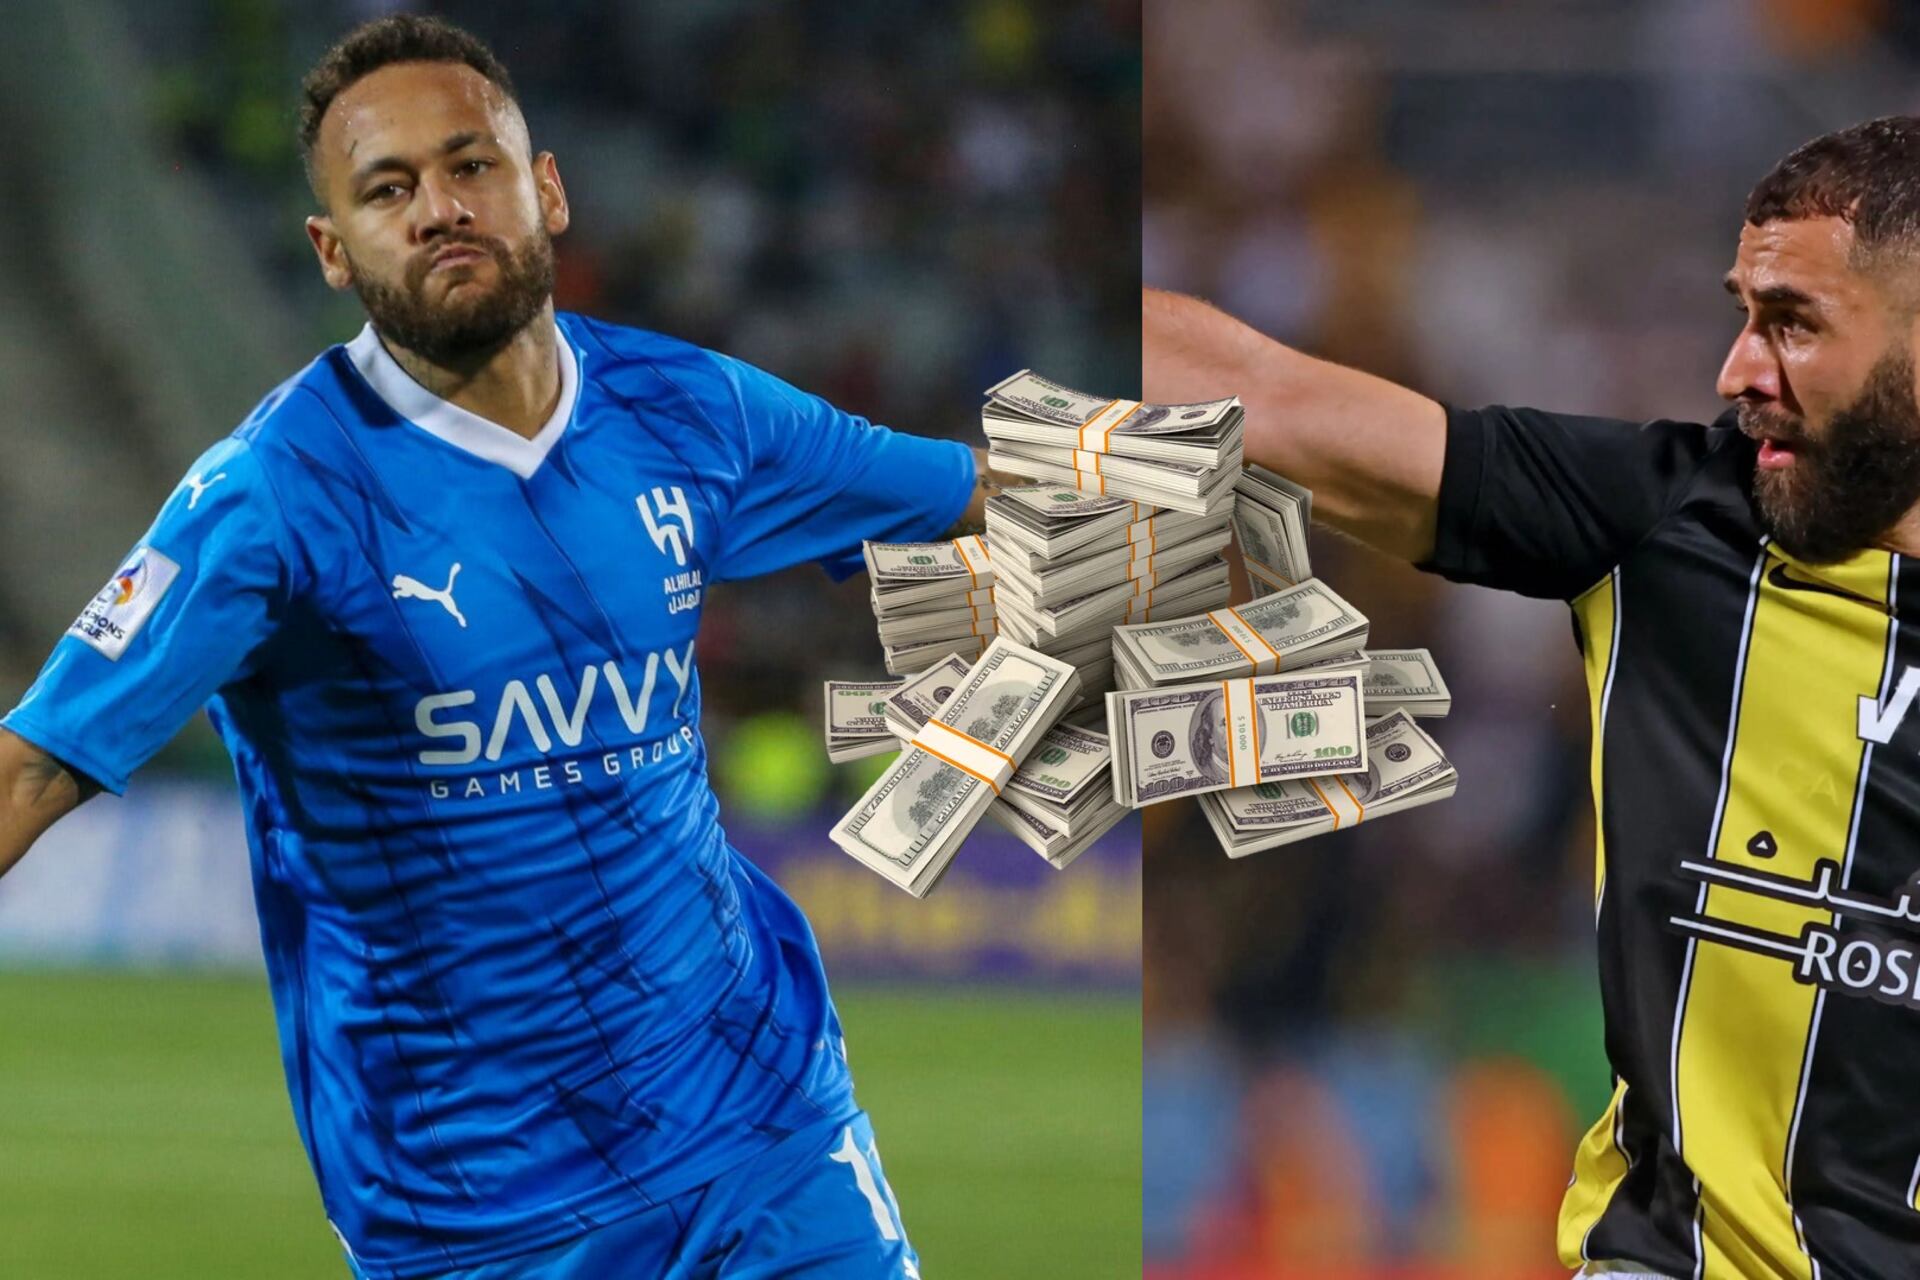 The price Saudi Arabia paid to bring players like Neymar and Benzema last summer